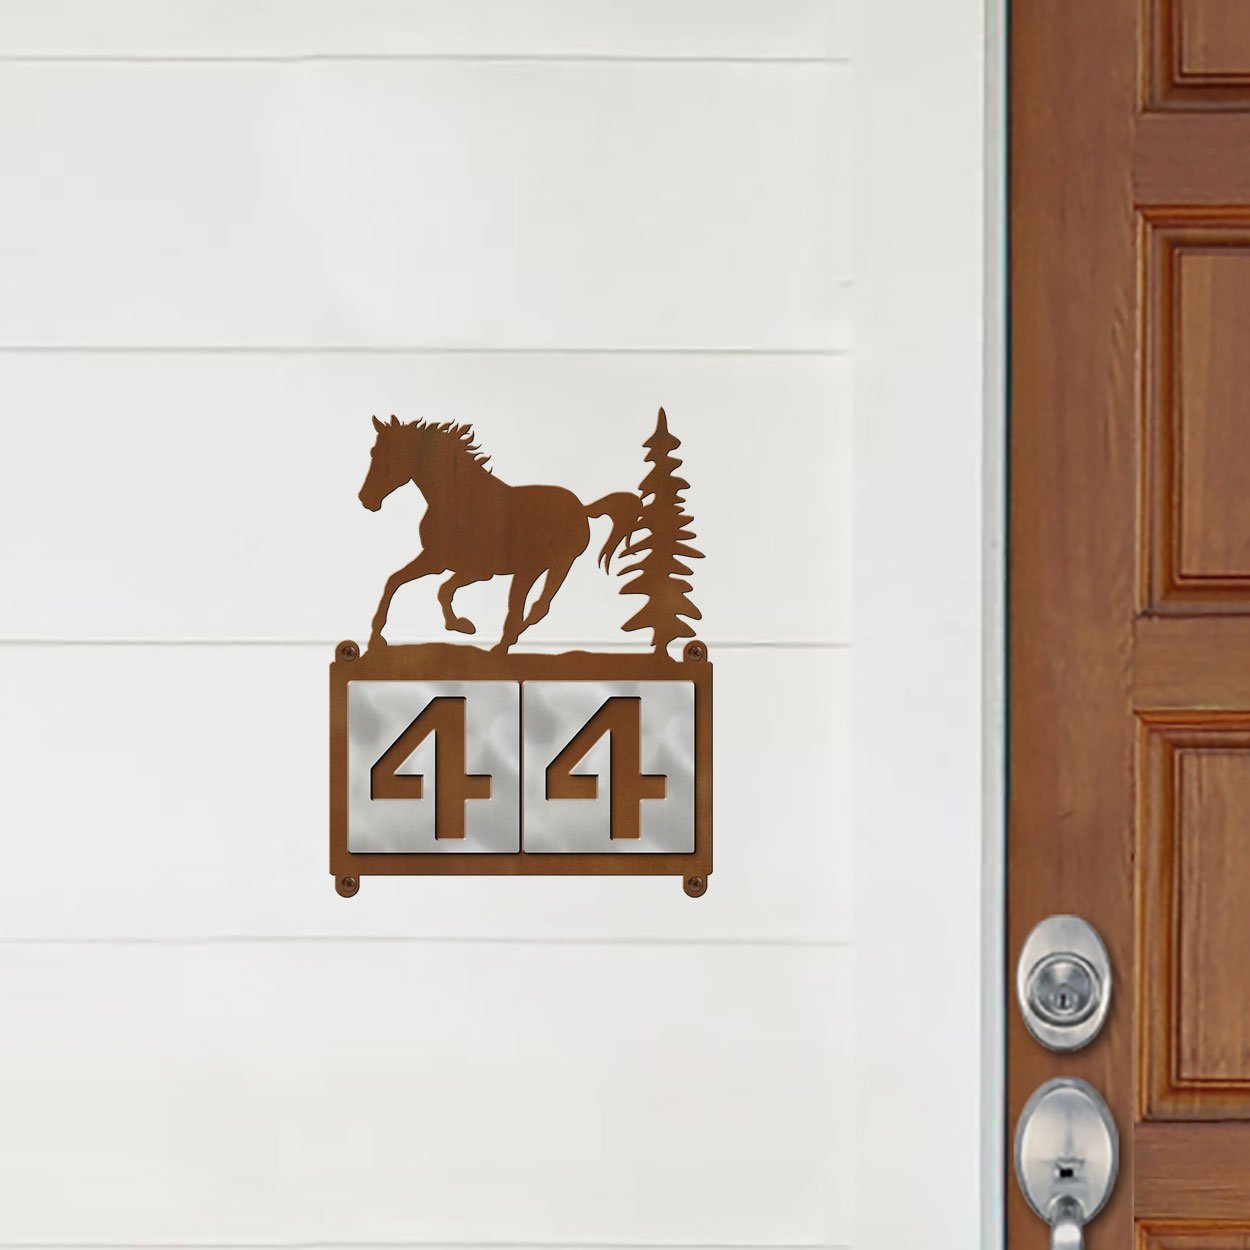 607102 - Running Horse Scene Design 2-Digit Horizontal 4-inch Tile Outdoor House Numbers